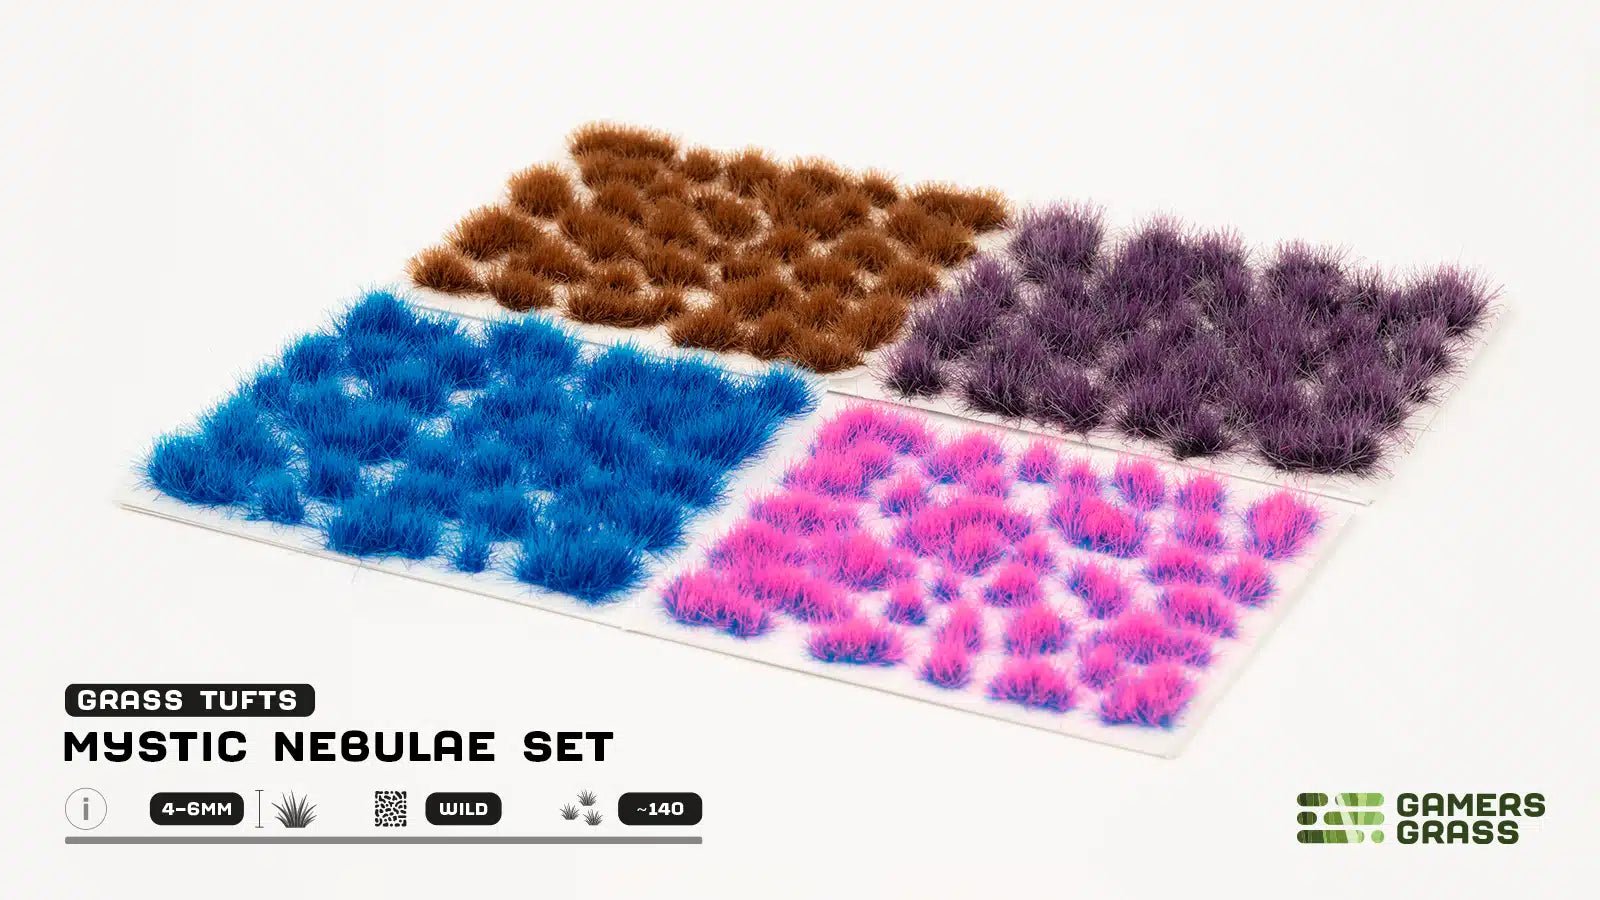 Grass Tufts - Mystic Nebulae Set - Gamers Grass - 140x Self Adhesives - Gootzy Gaming